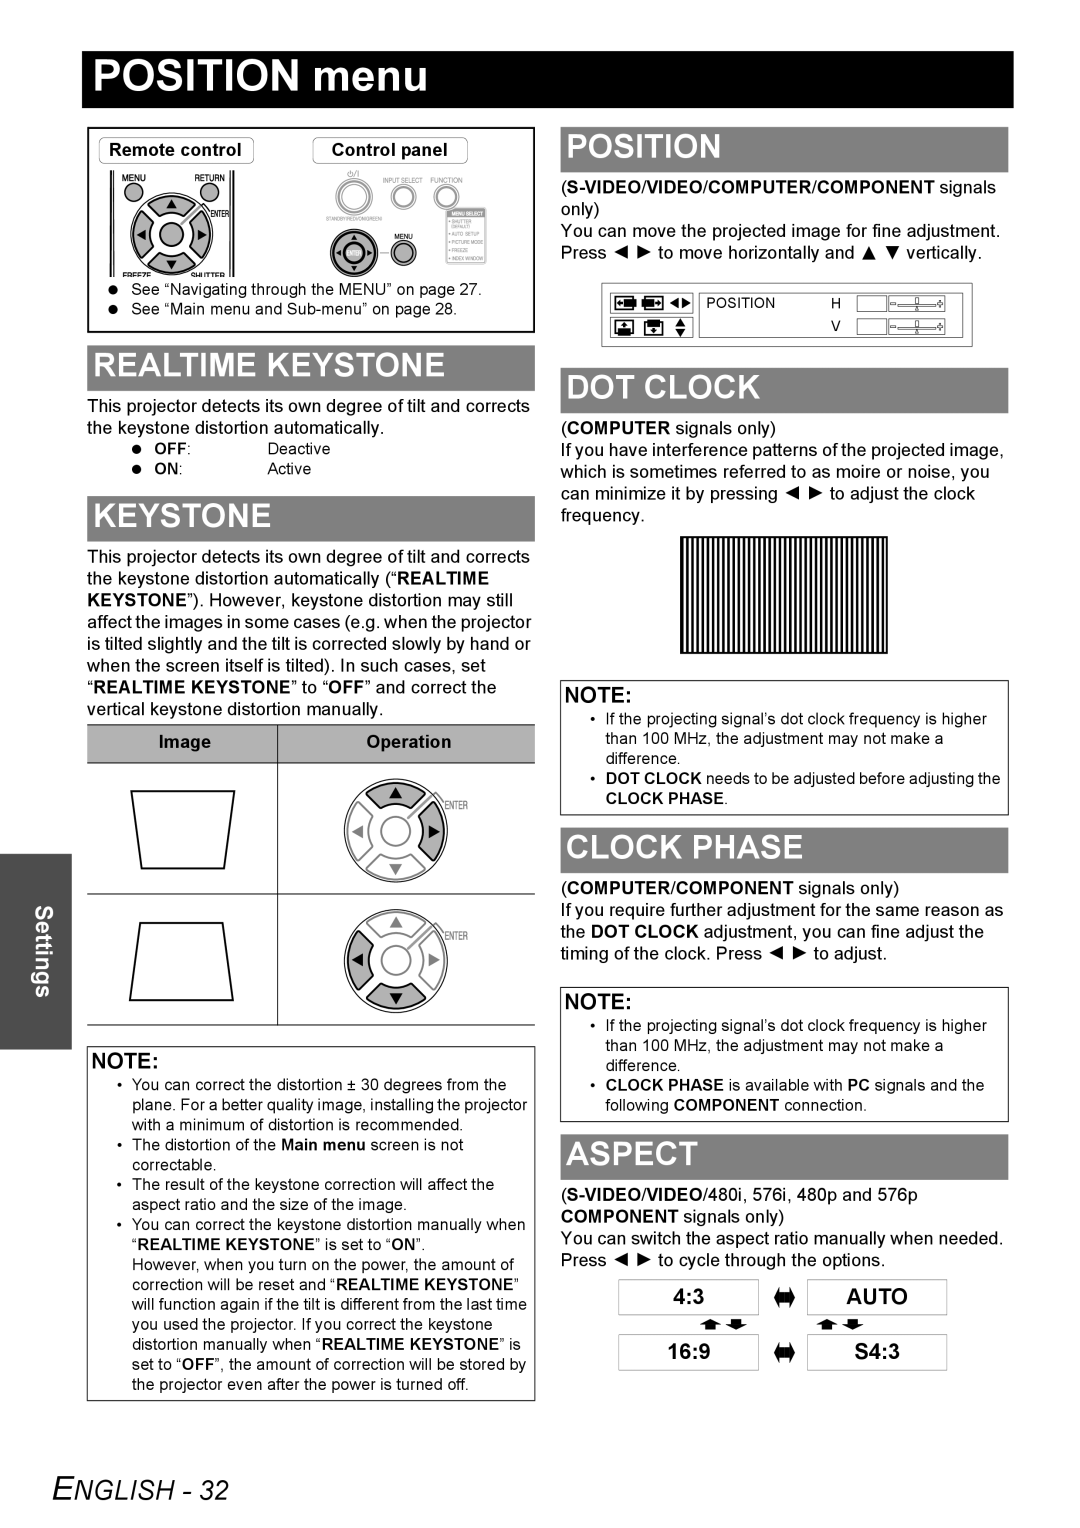 Philips PT-LB51SU POSITION menu, Realtime Keystone, Position, Dot Clock, Clock Phase, Aspect, English, Settings, Auto 